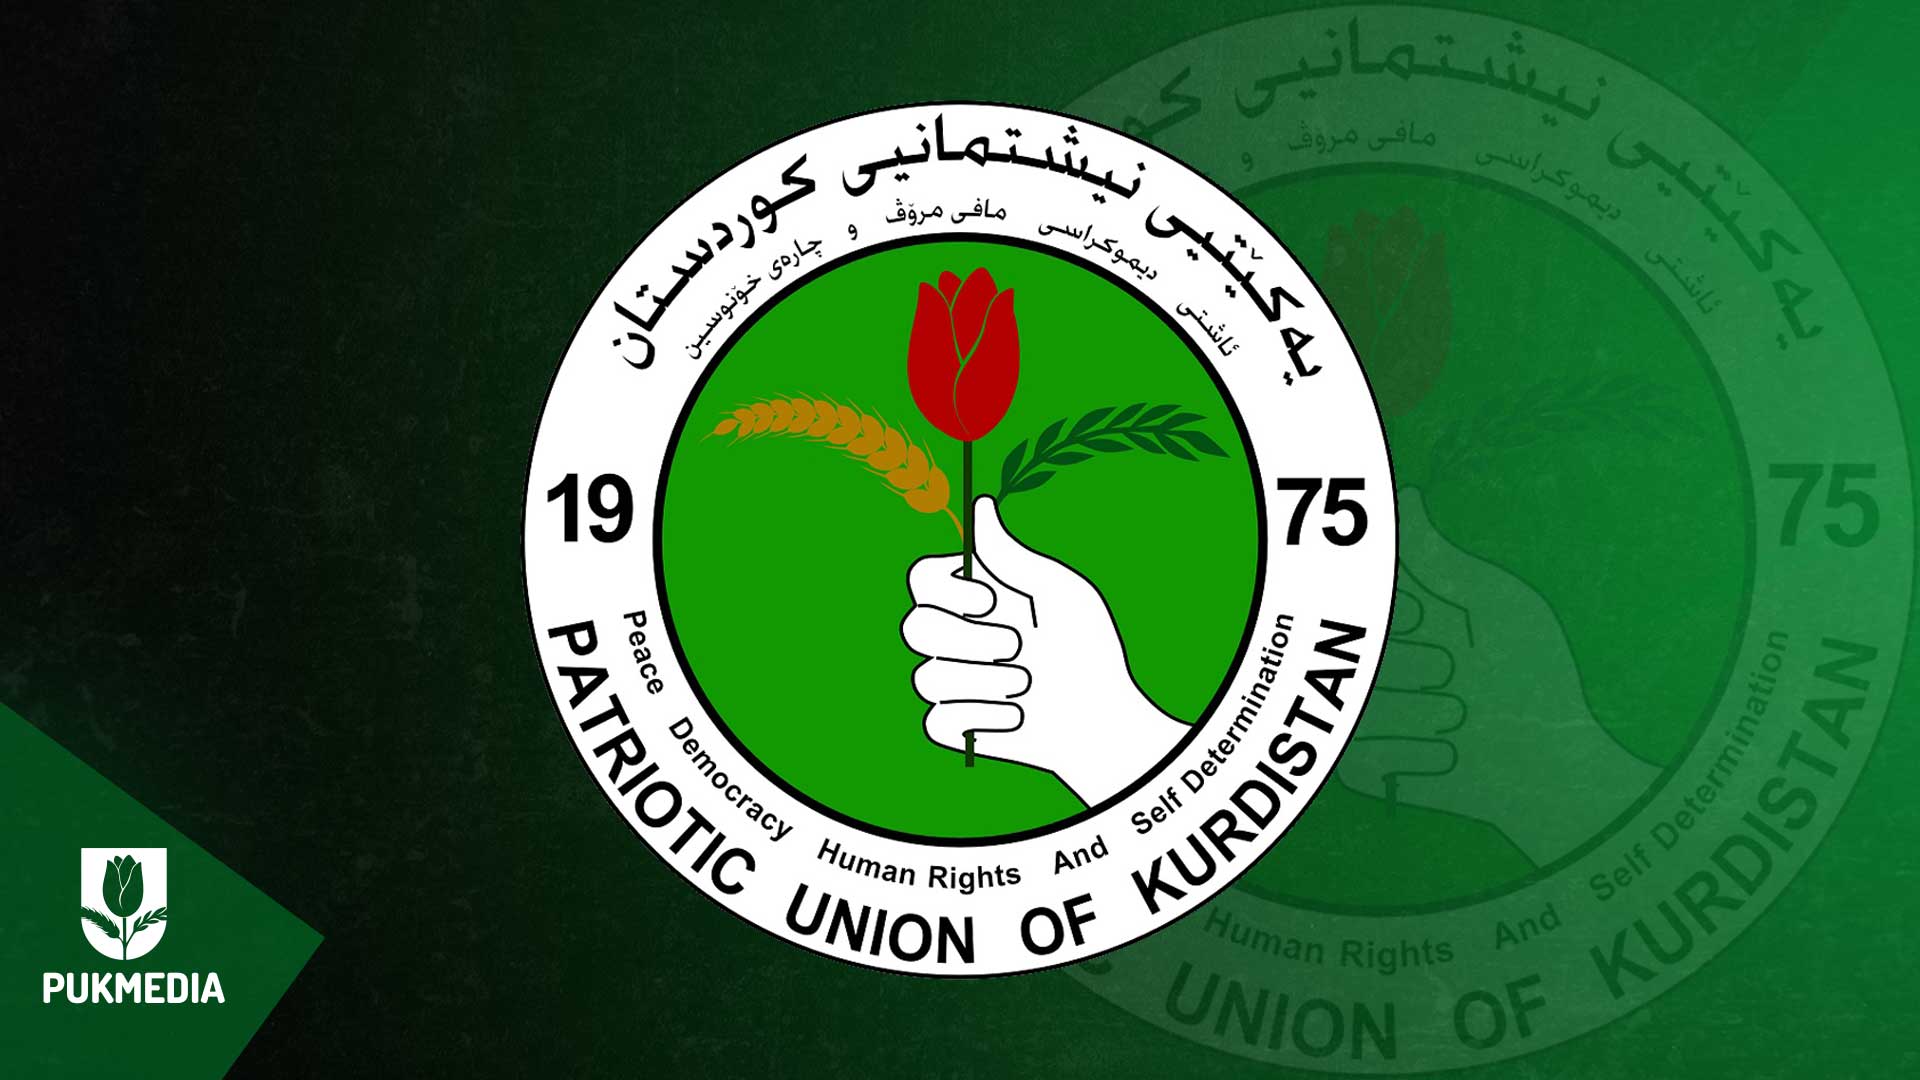  The logo of the Patriotic Union of Kurdistan